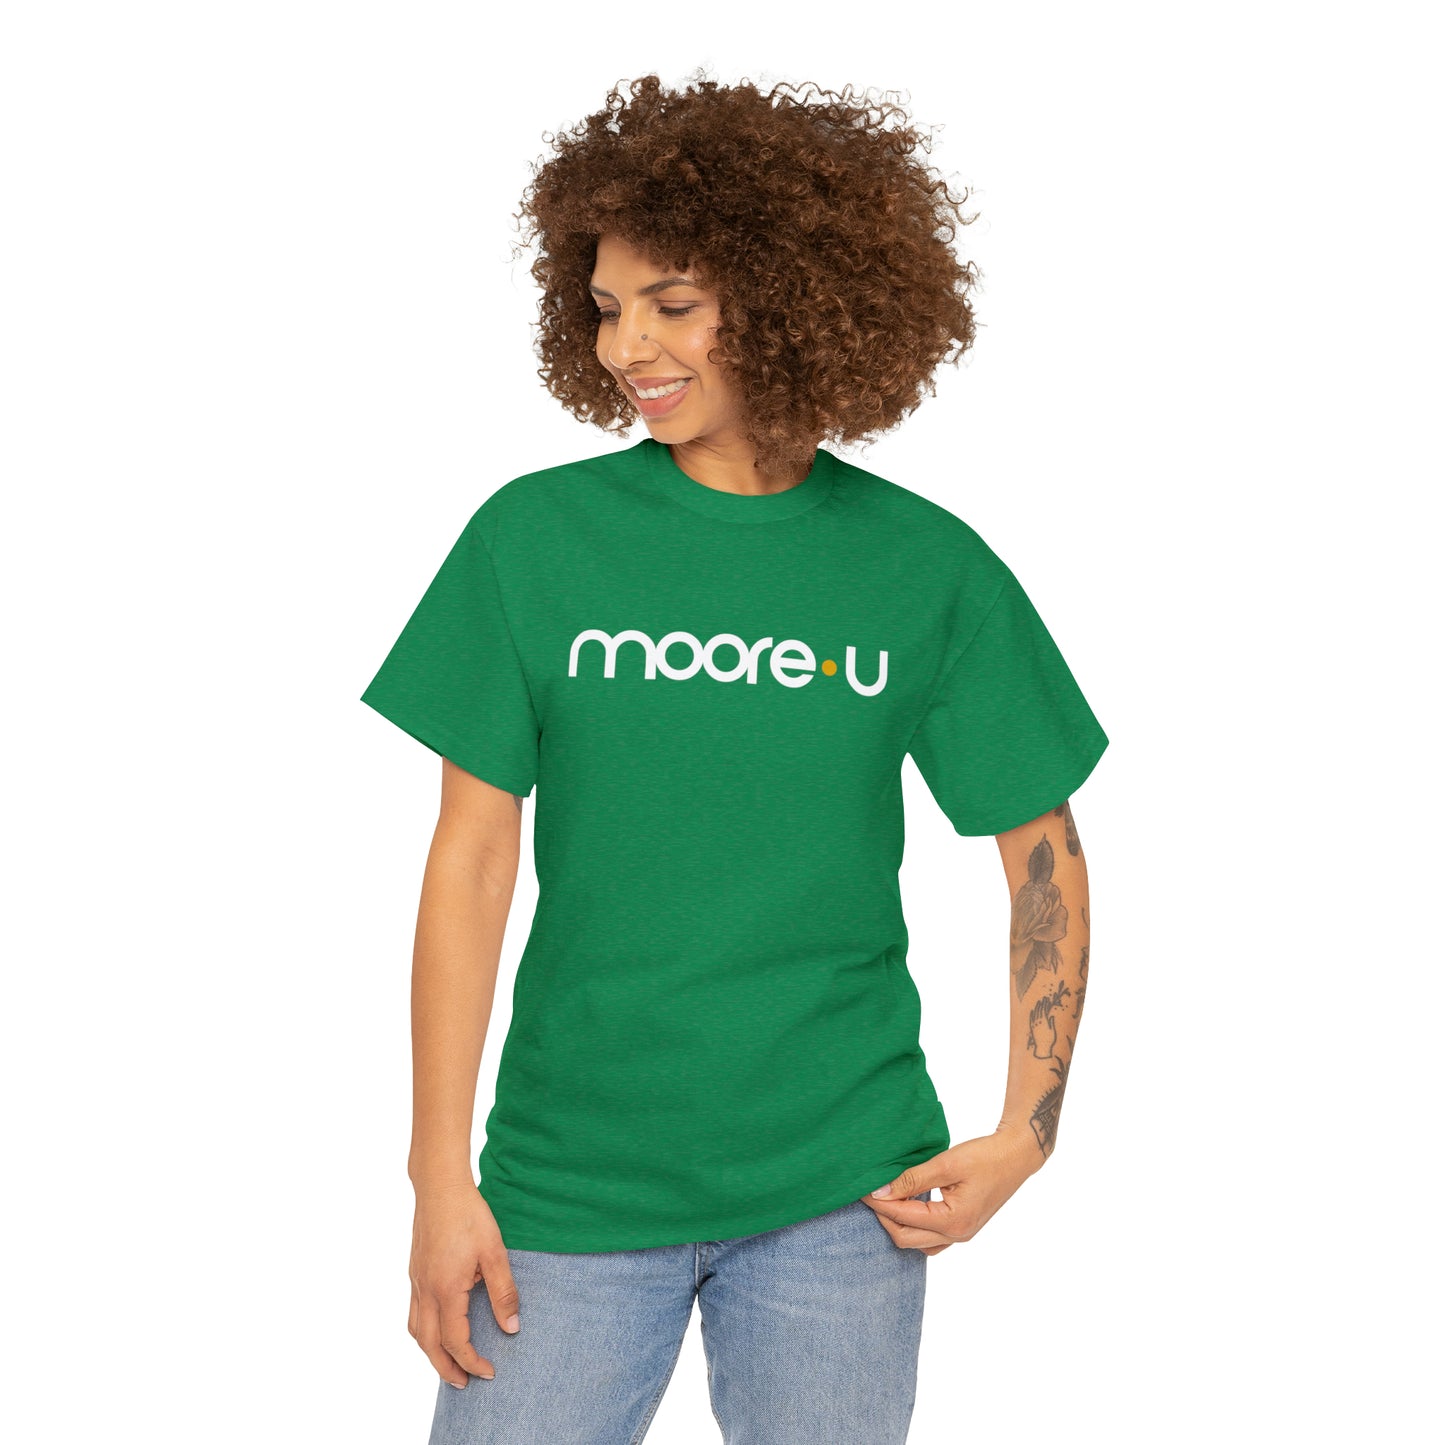 Moore- U Unisex Heavy Cotton Tee